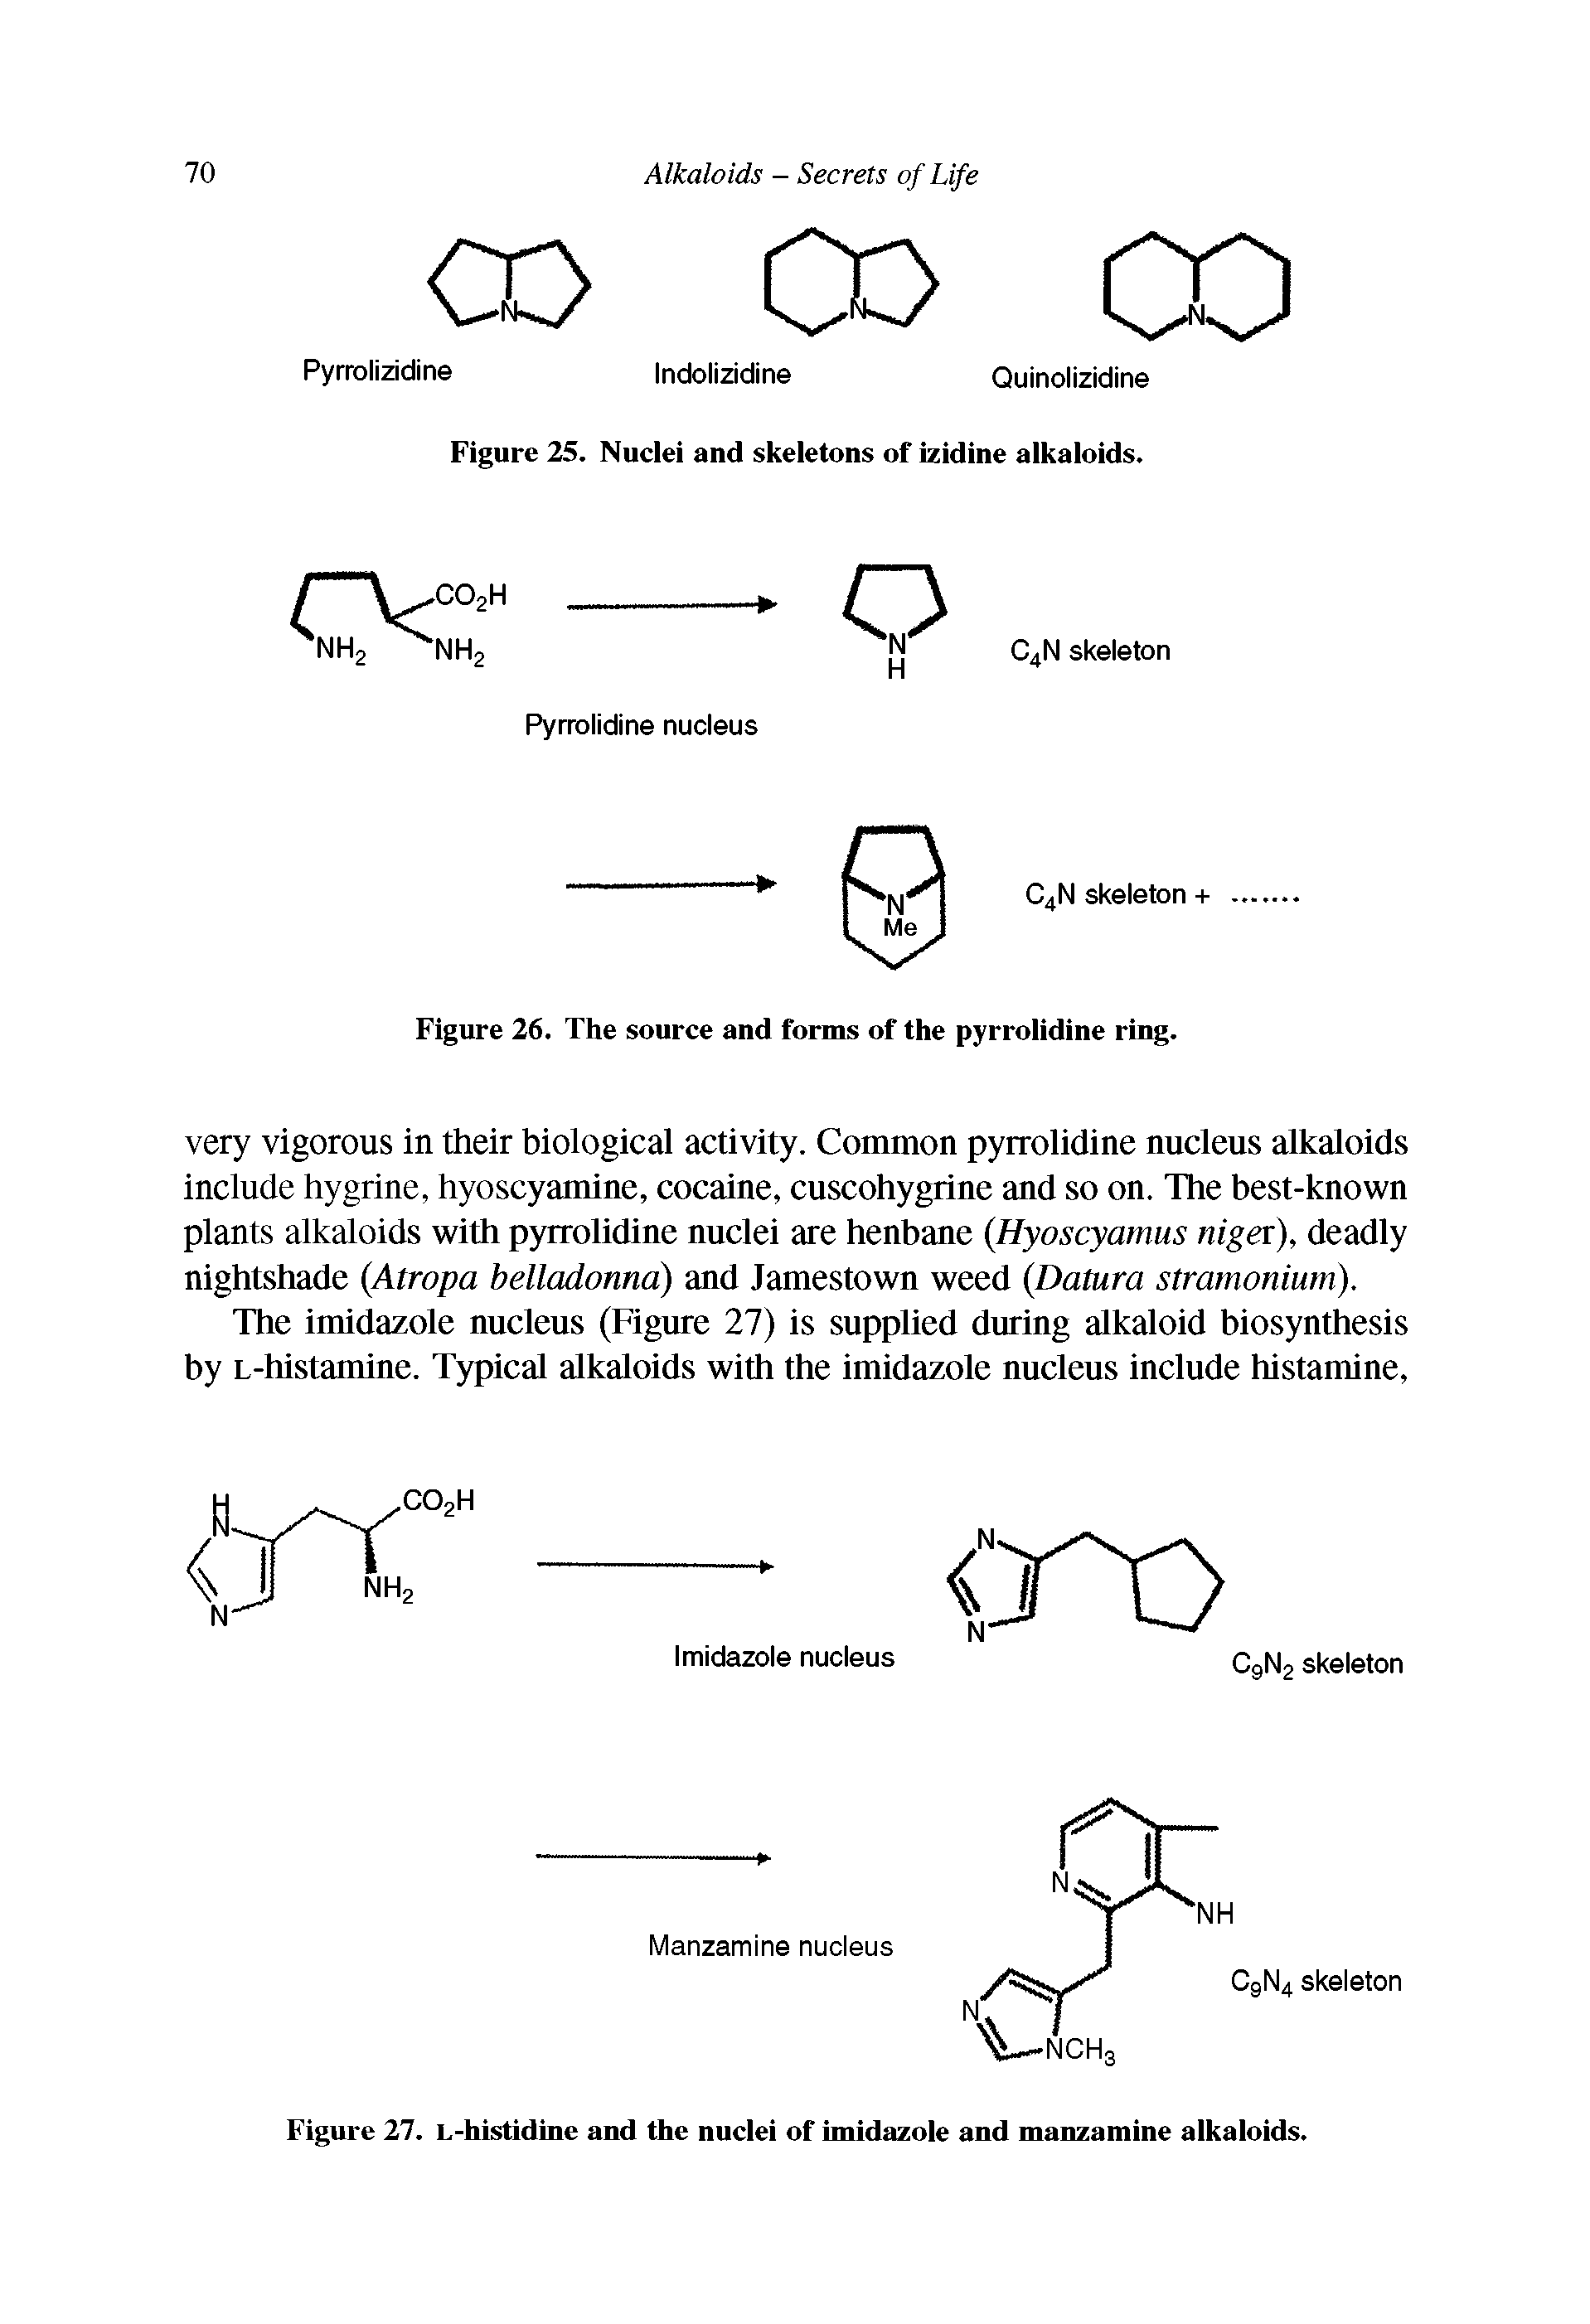 Figure 27. L-histidine and the nuclei of imidazole and manzamine alkaloids.